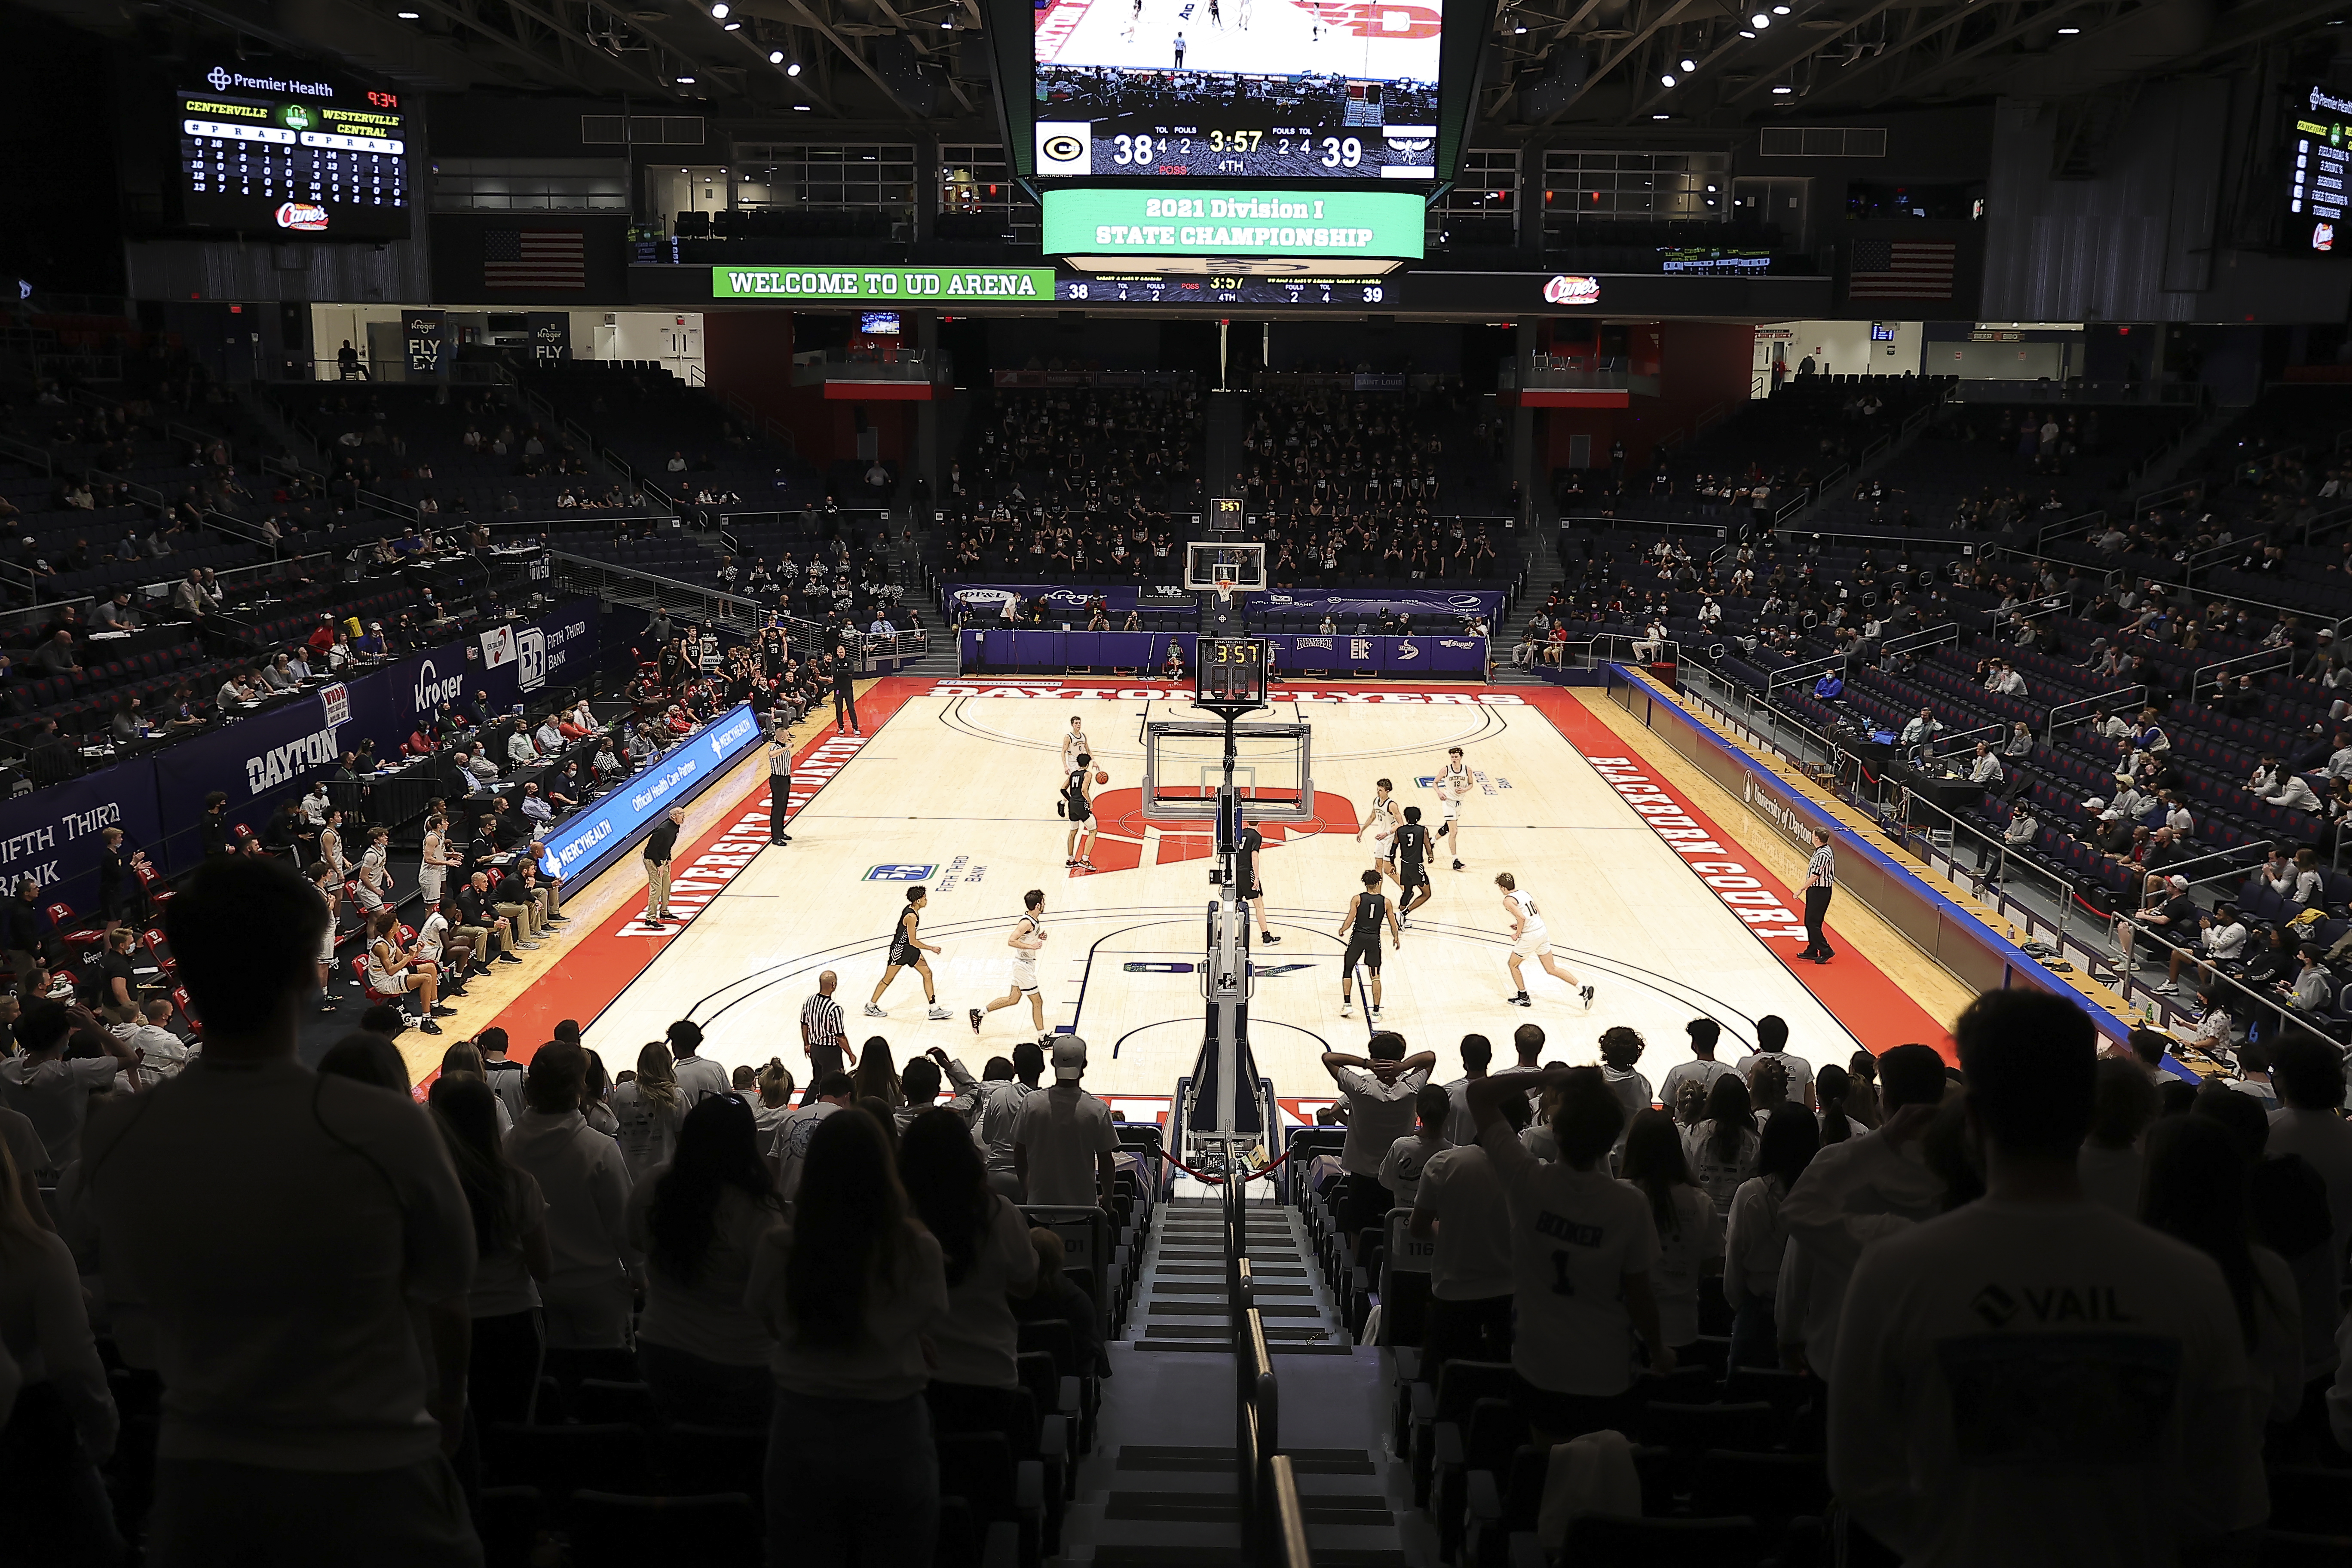 University of Dayton to Host OHSAA Basketball State Tournaments